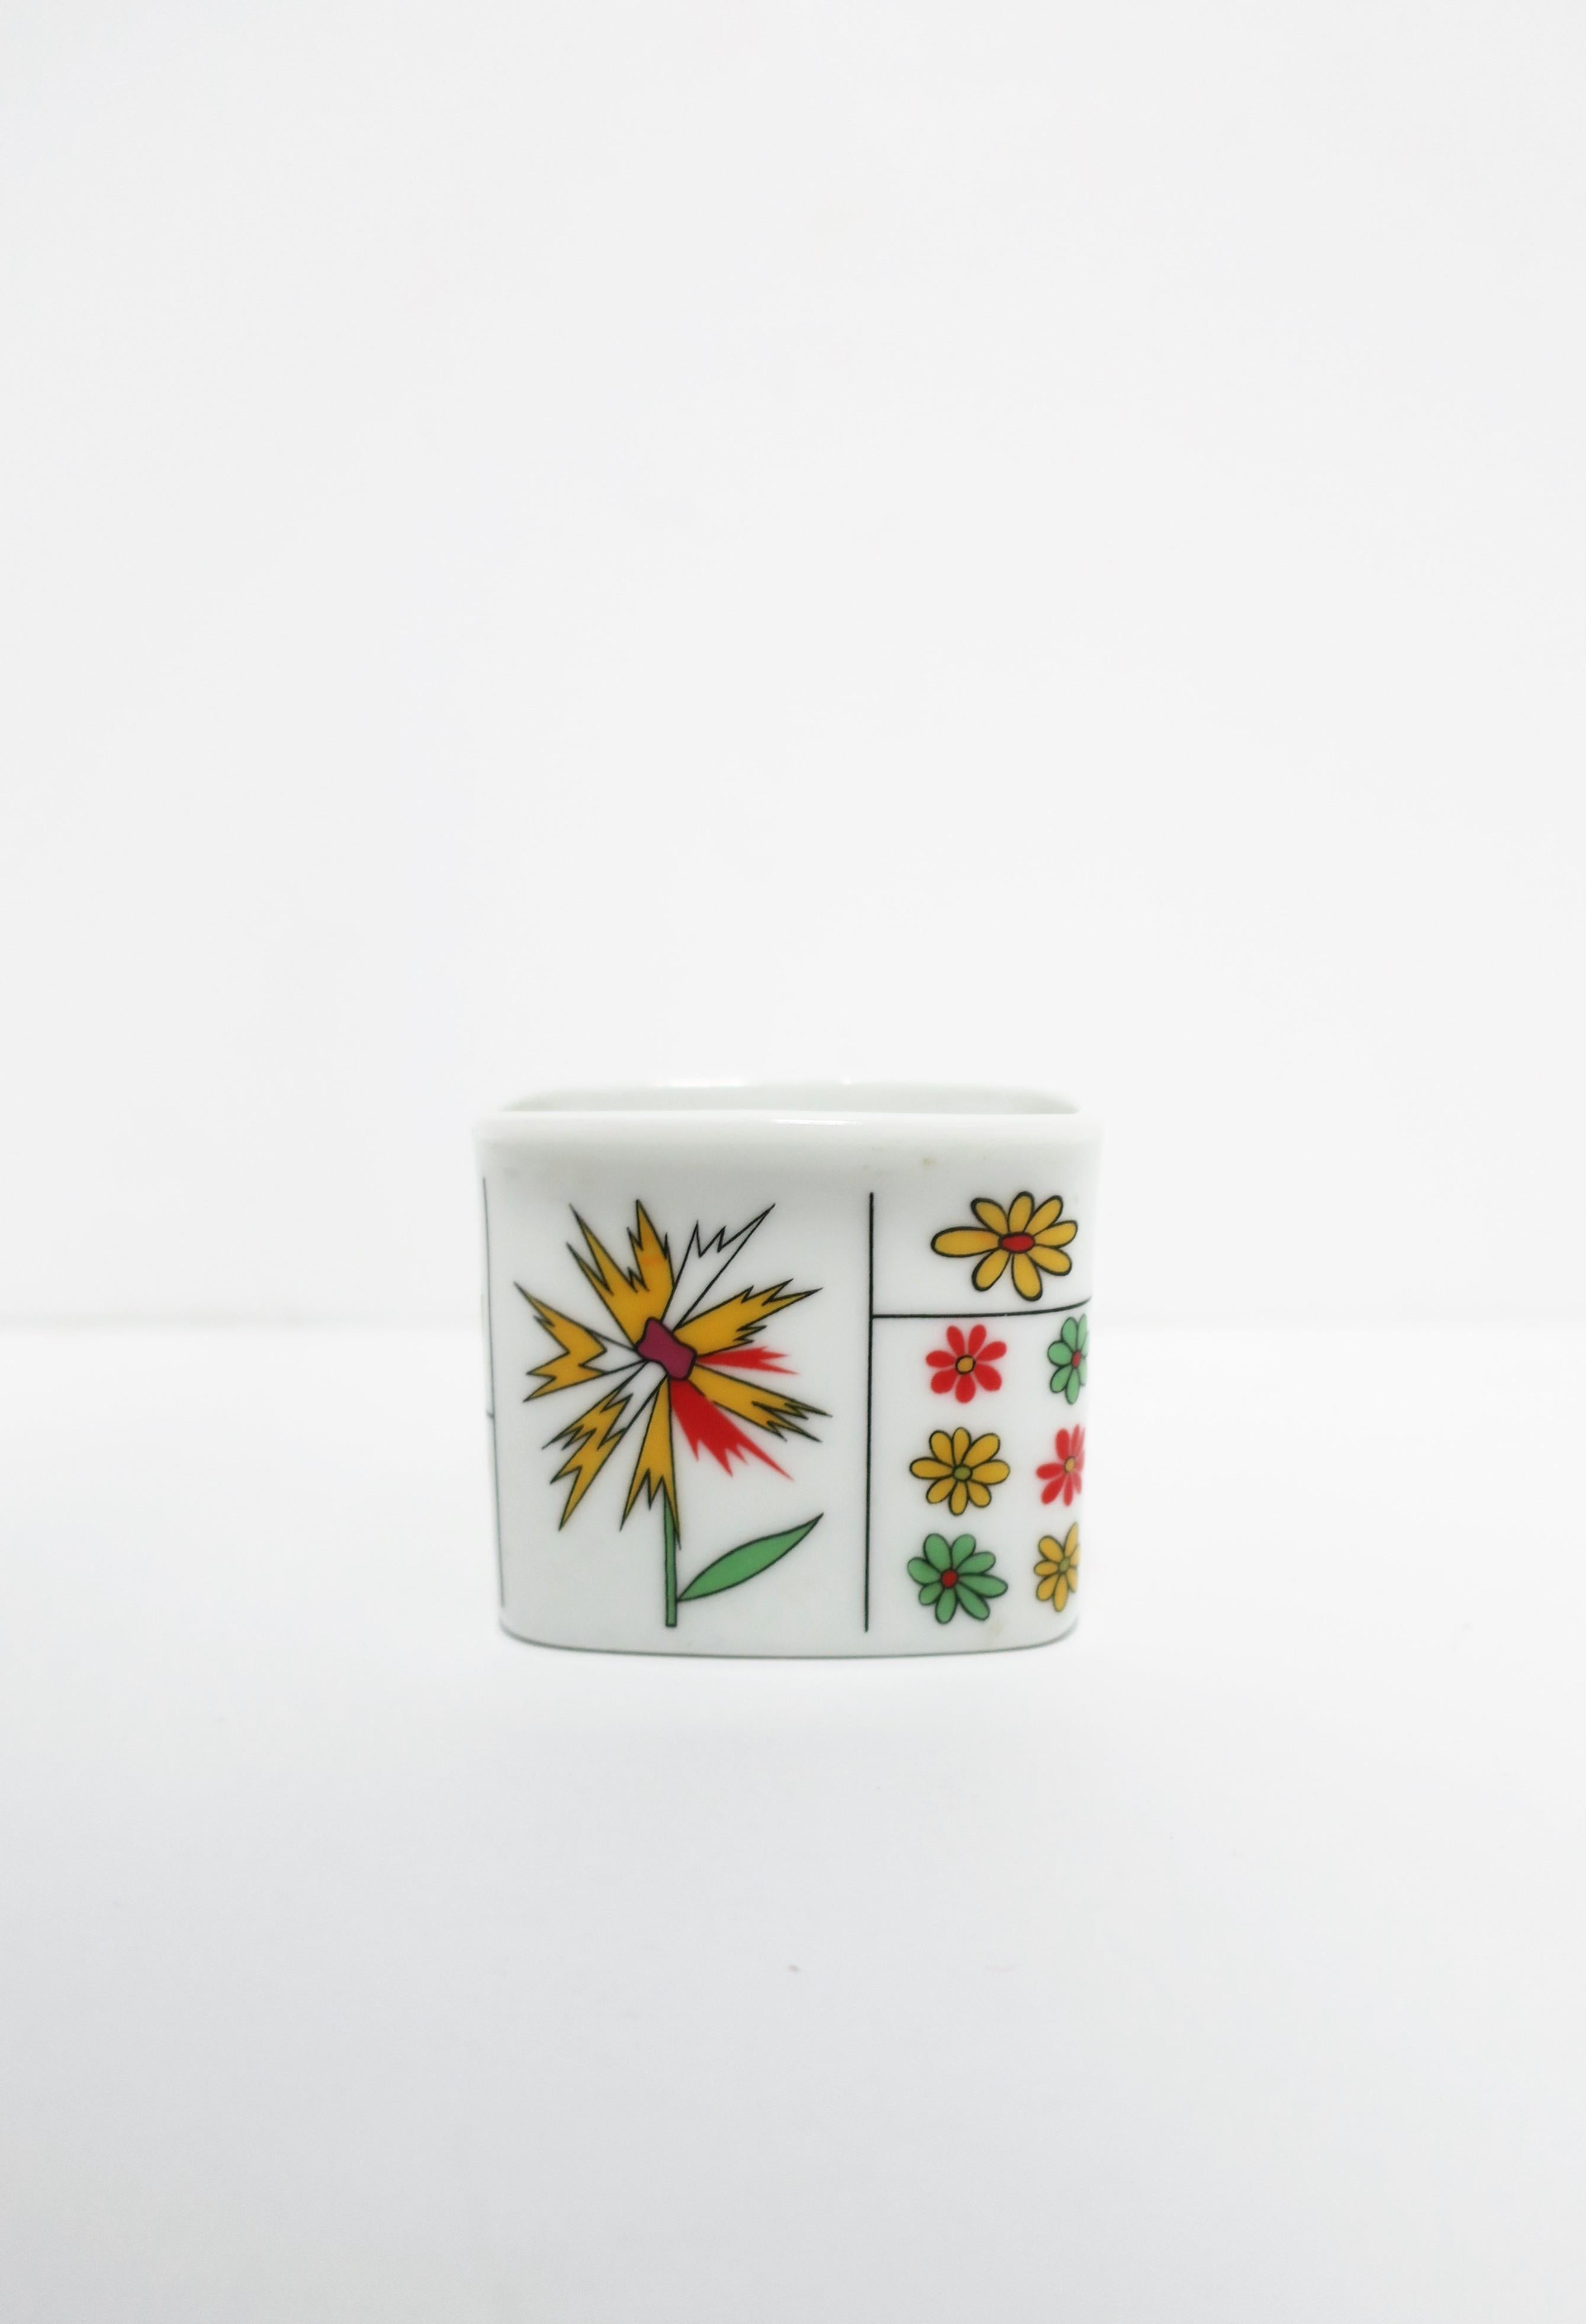 German Emilio Pucci & Hans Theo Baumann Porcelain Cig Vessel for Rosenthal Studio-Line For Sale